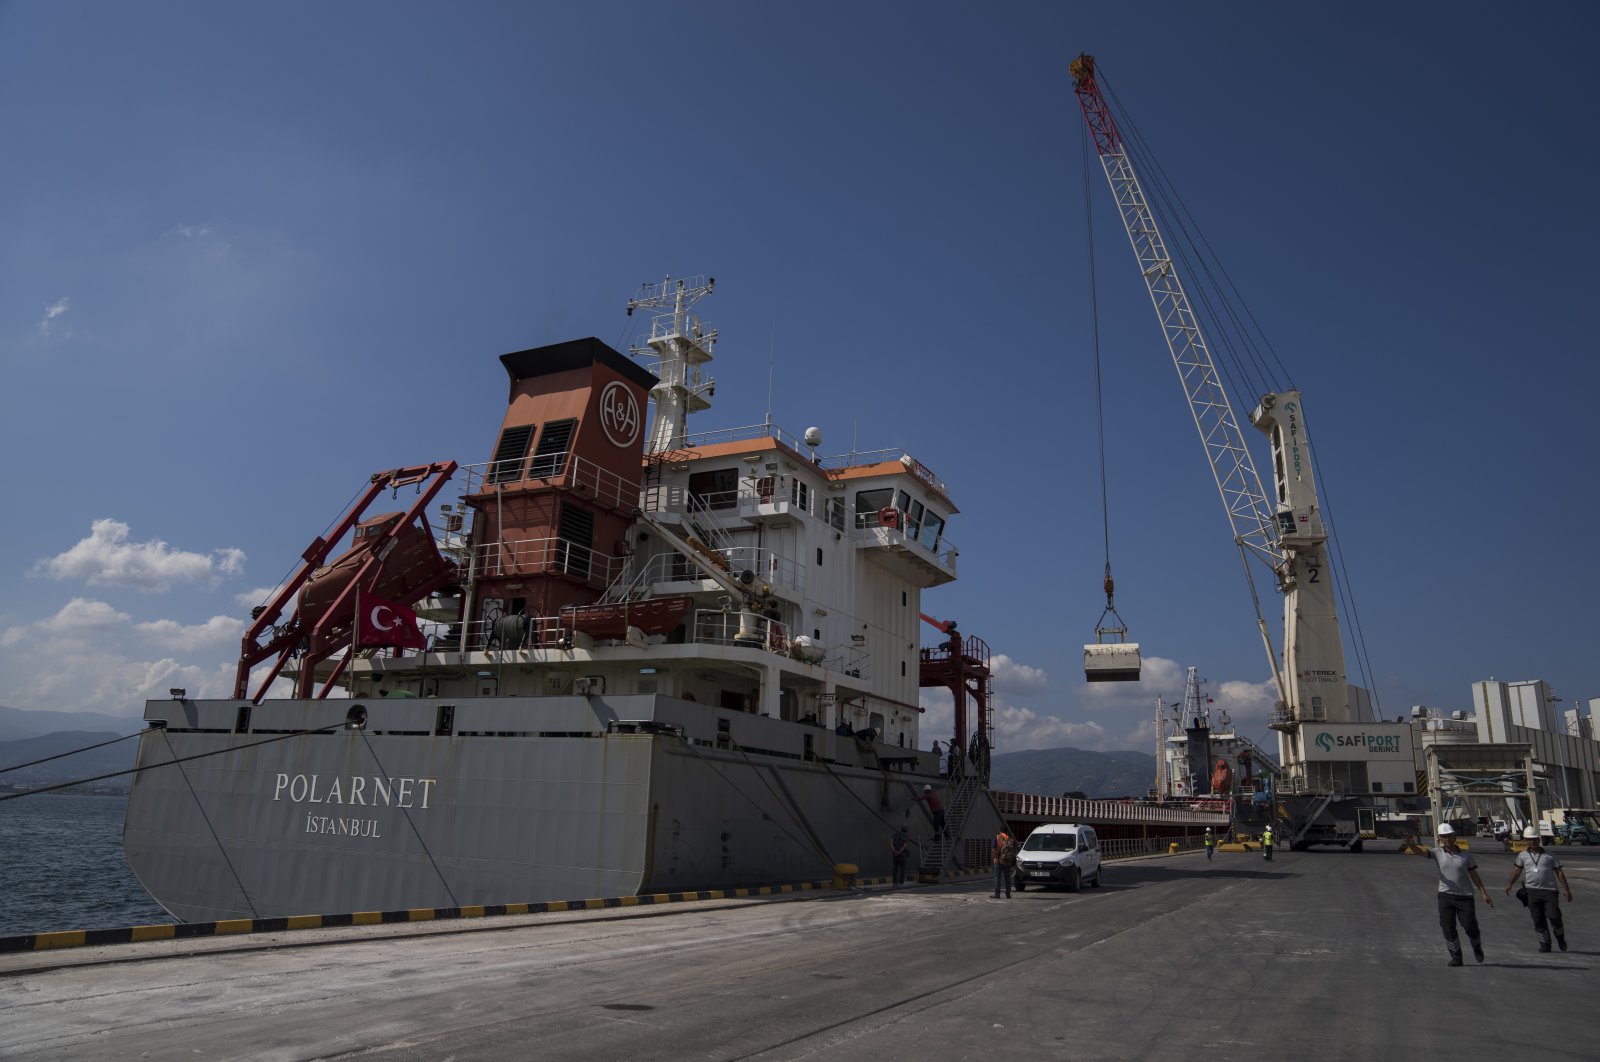 The cargo ship Polarnet arrives at Derince port in the Gulf of Izmit, Türkiye, Monday, Aug. 8, 2022. (AP Photo)